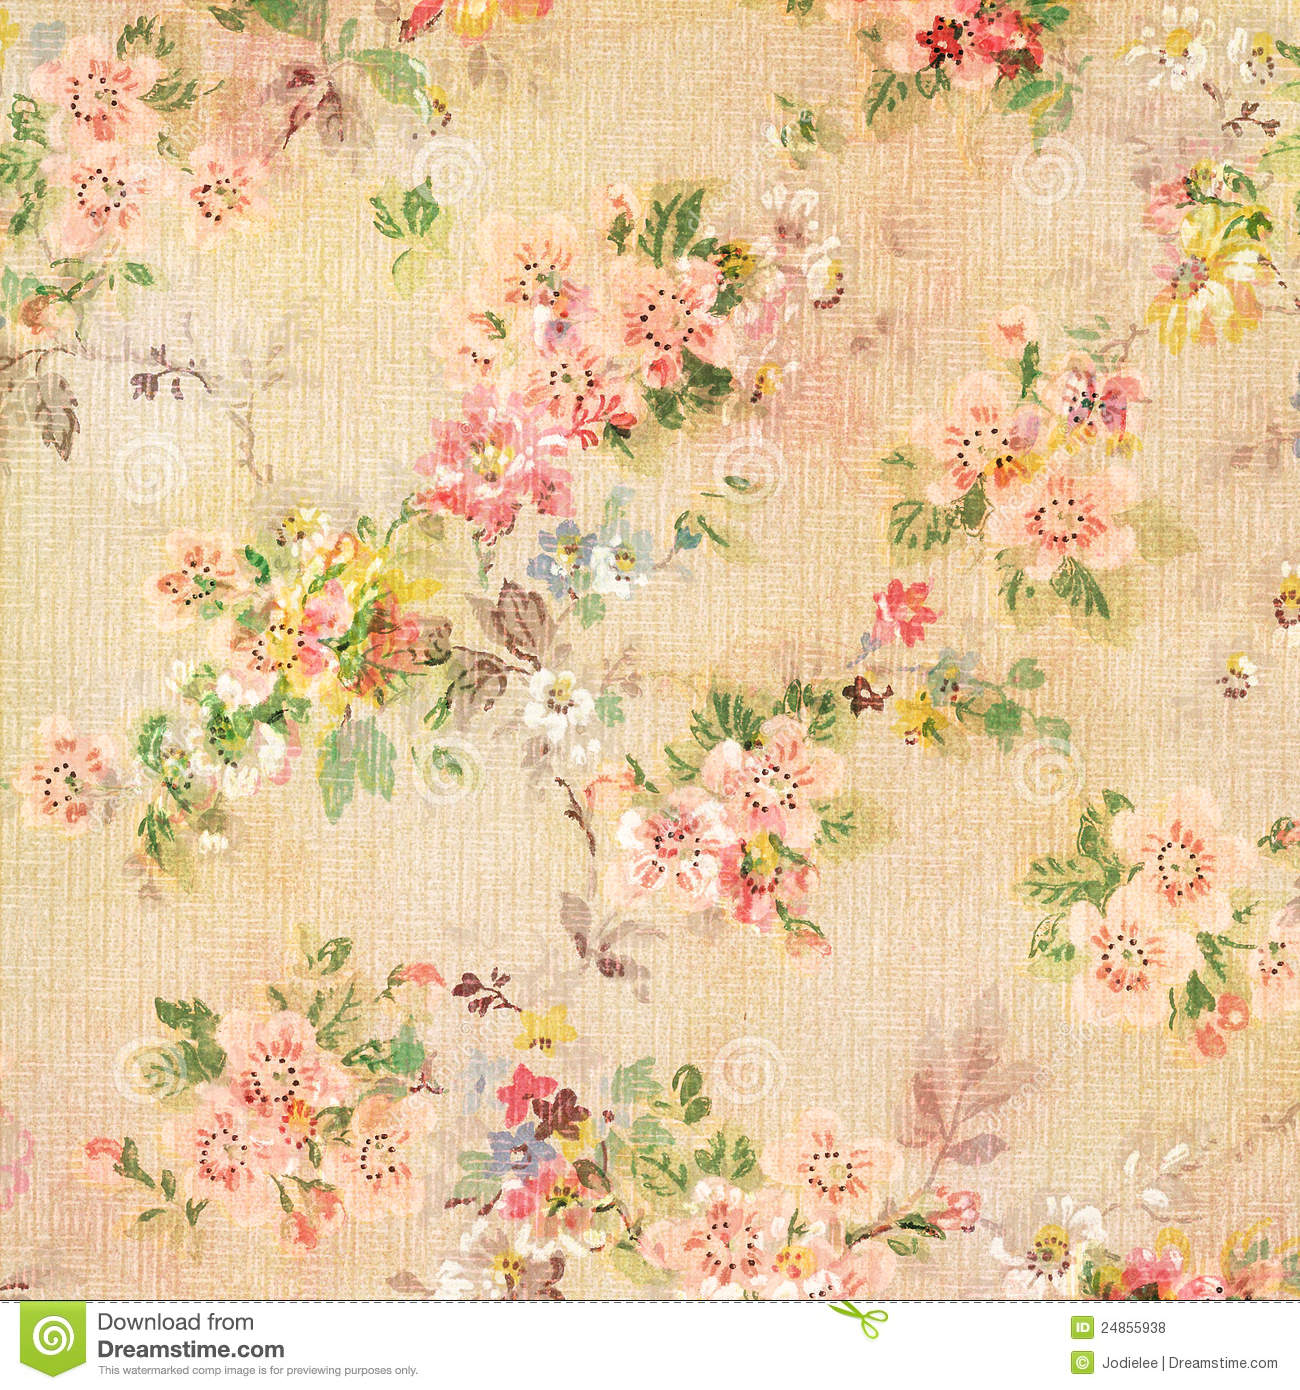  photos shabby chic vintage antique rose floral wallpaper image24855938